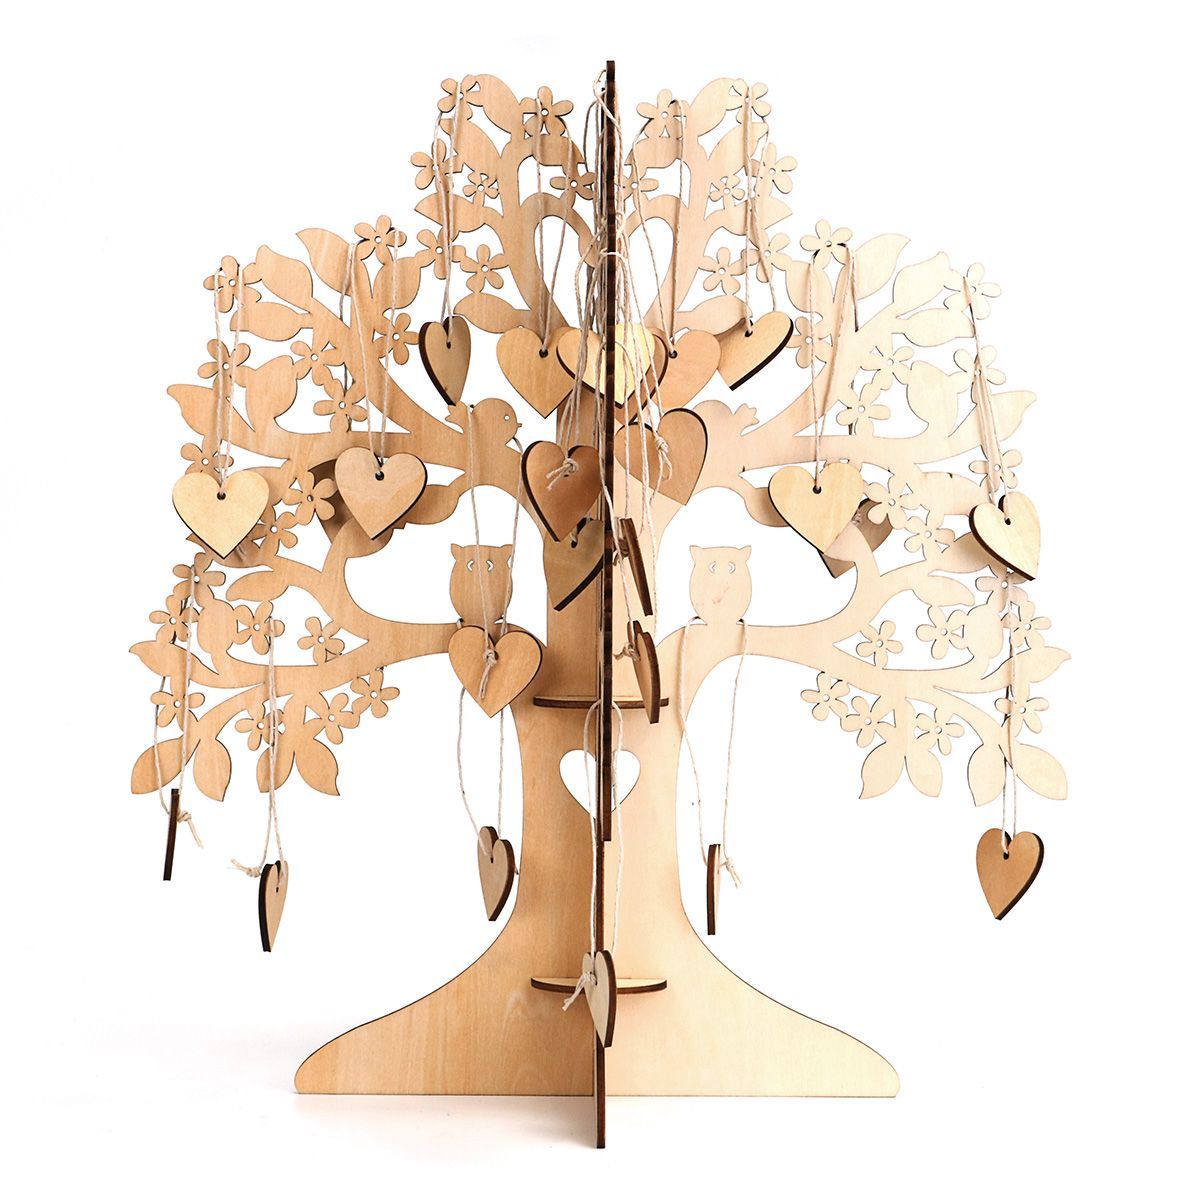 DIY-Wedding-Book-Tree-Marriage-Guest-Book-Wooden-Tree-Hearts-Pendant-Drop-Ornaments-Decorations-1468183